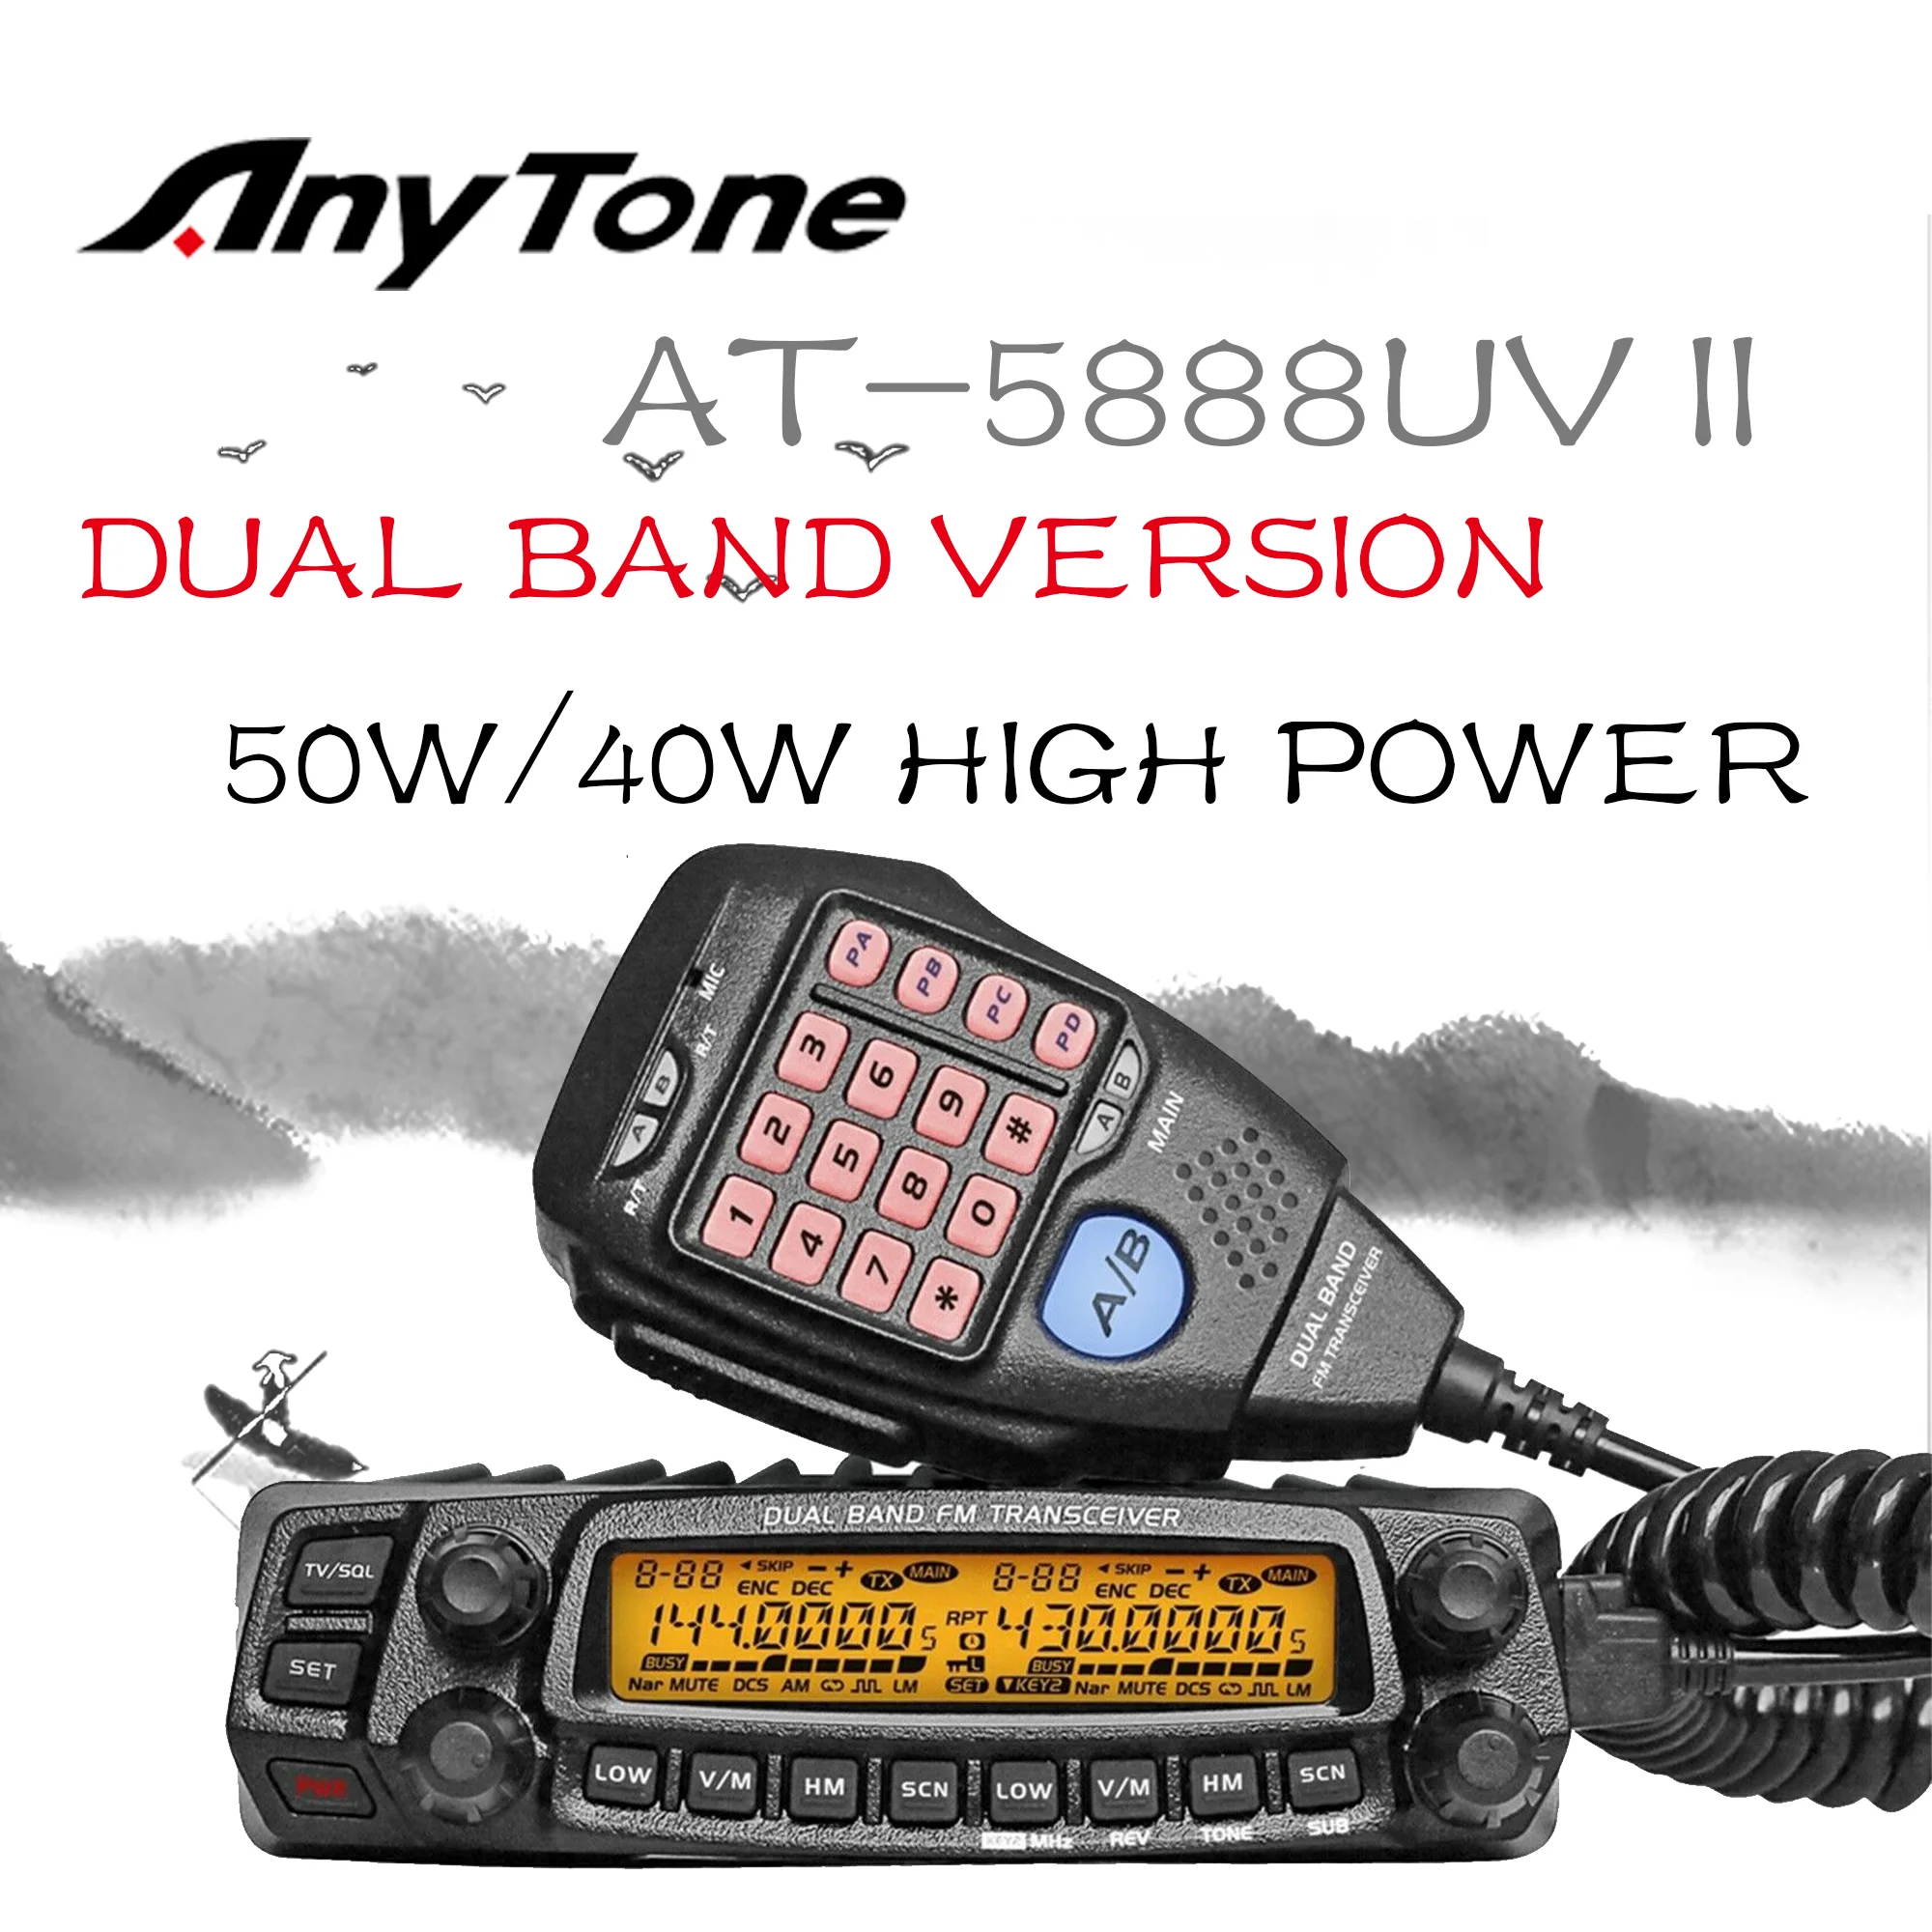 

Anytone AT-5888UV II Analog Dual Band Mobile Transceiver 50Watt VHF/UHF Car Truck Amateur Radio HAM Two Way Radio